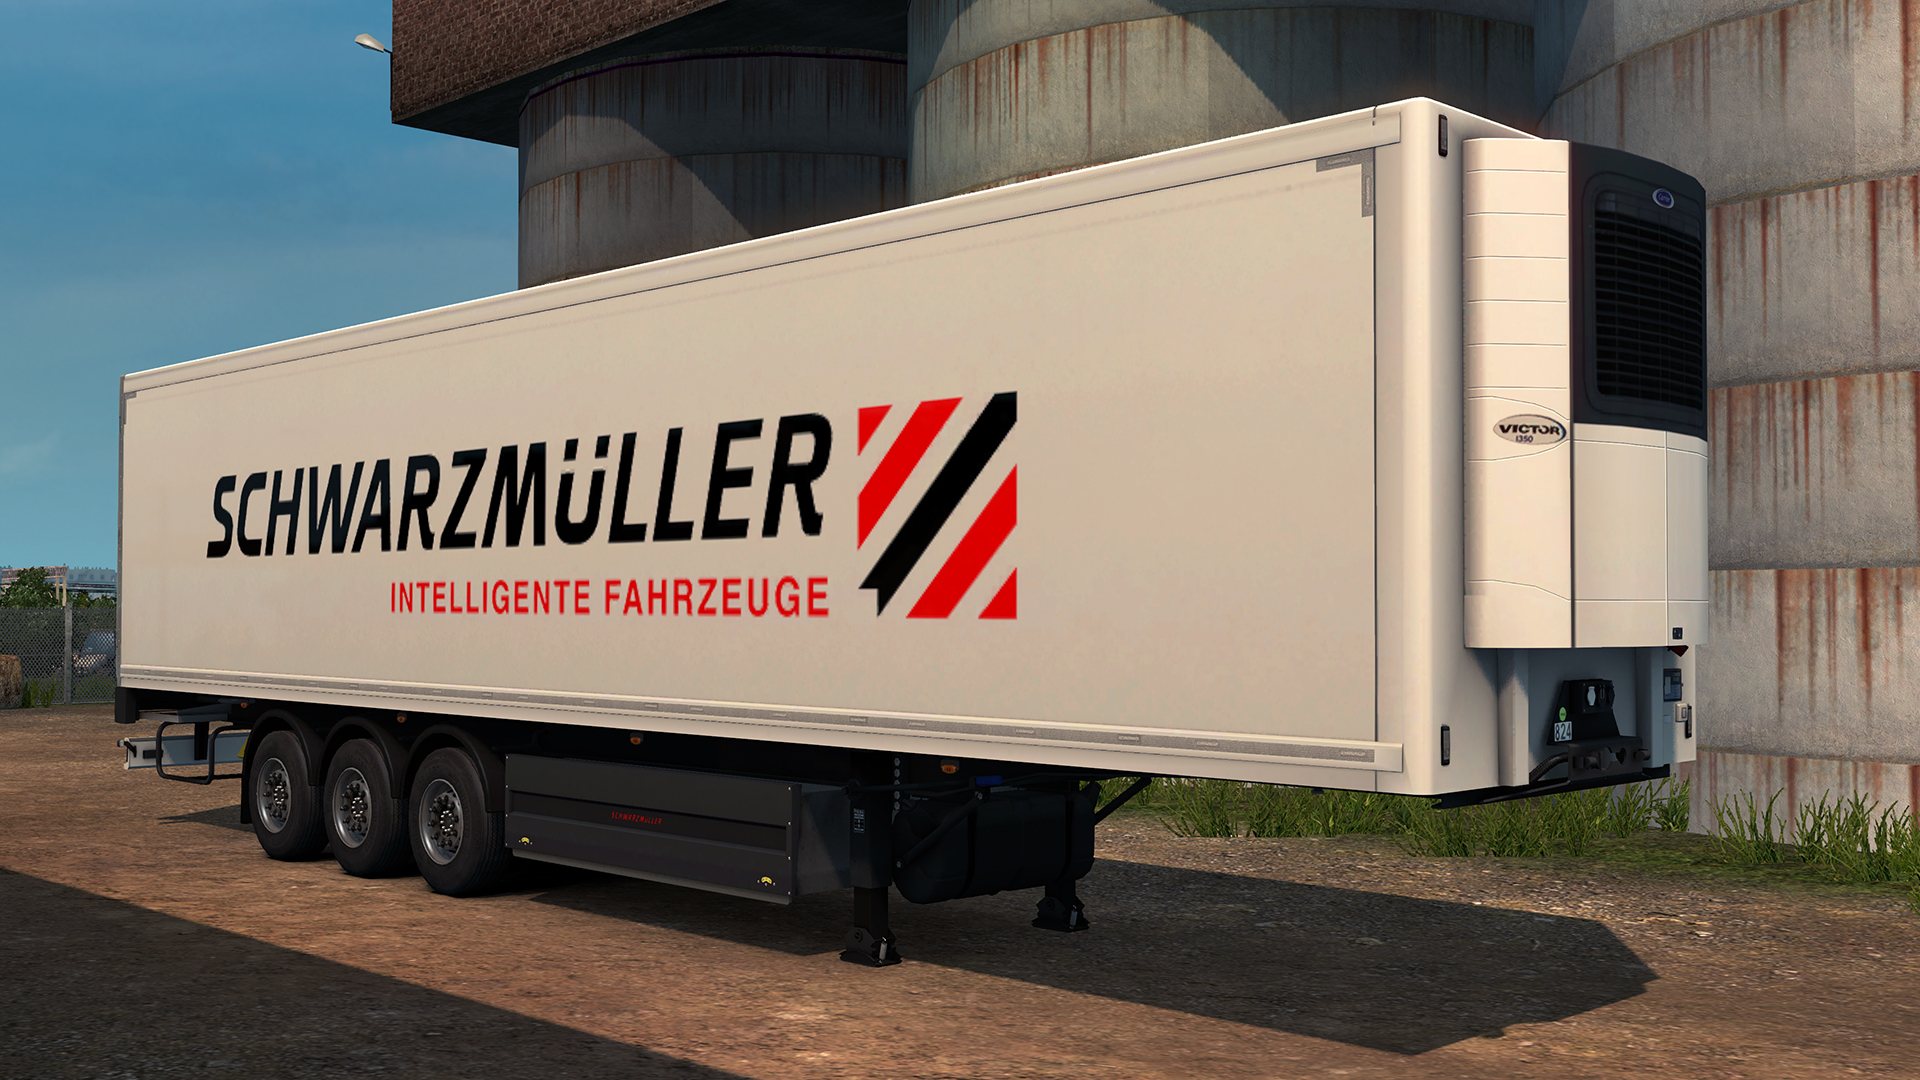 euro-truck-simulator-2-schwarzm-ller-trailer-pack-dlc-steam-cd-key-kinguin-free-steam-keys